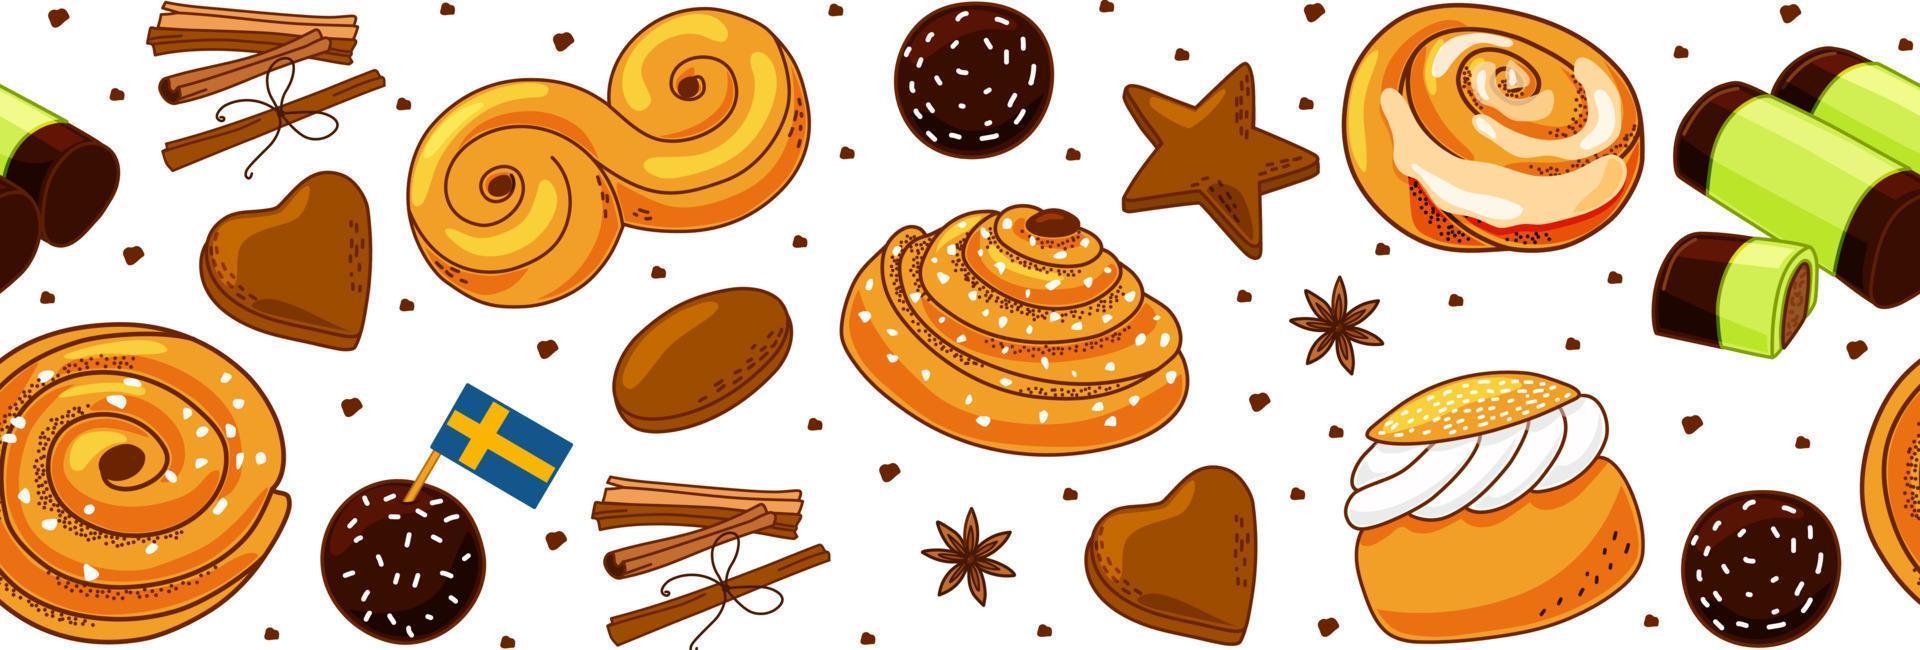 Traditional Swedish sweets seamless border. Kanelbulle bun, cinnamon roll, Pepparkakor, Semla, lussekatt, dammsugare, and chokladboll. Vector cartoon illustration